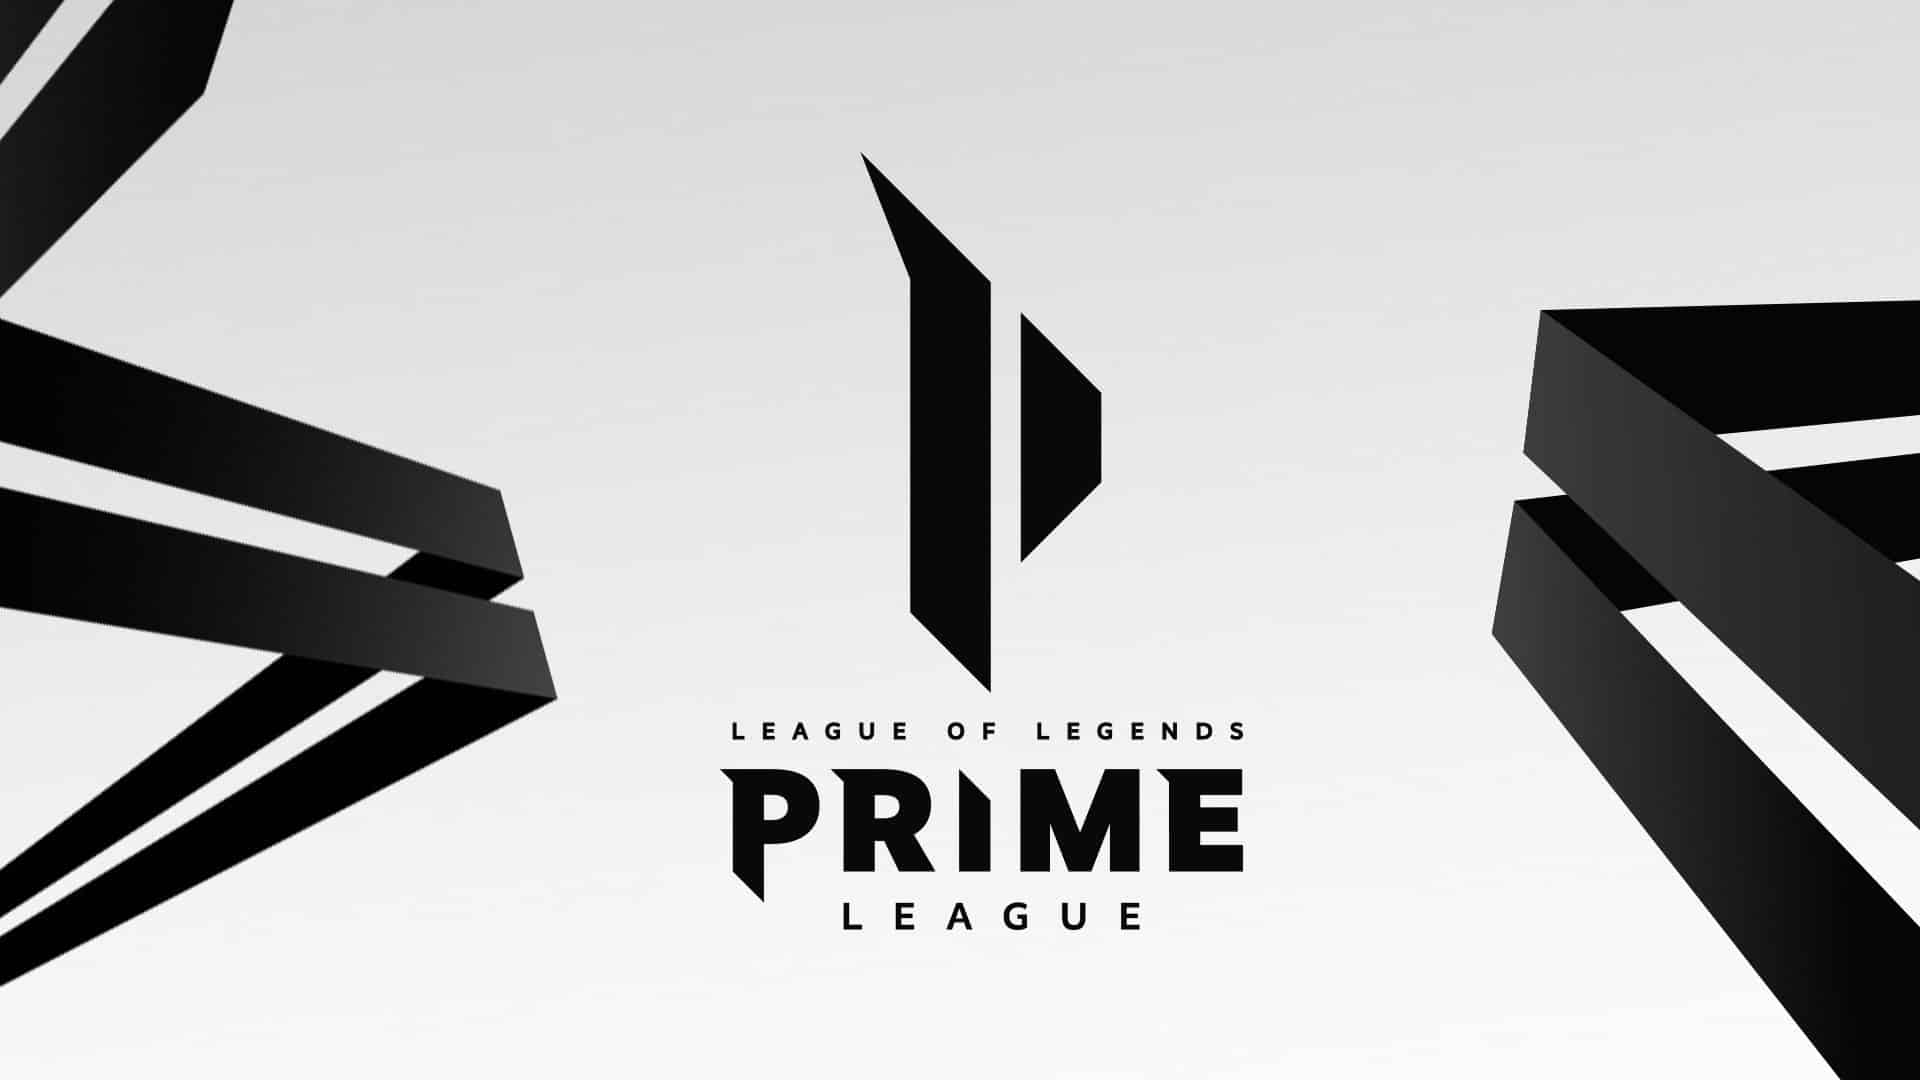 prime gaming league